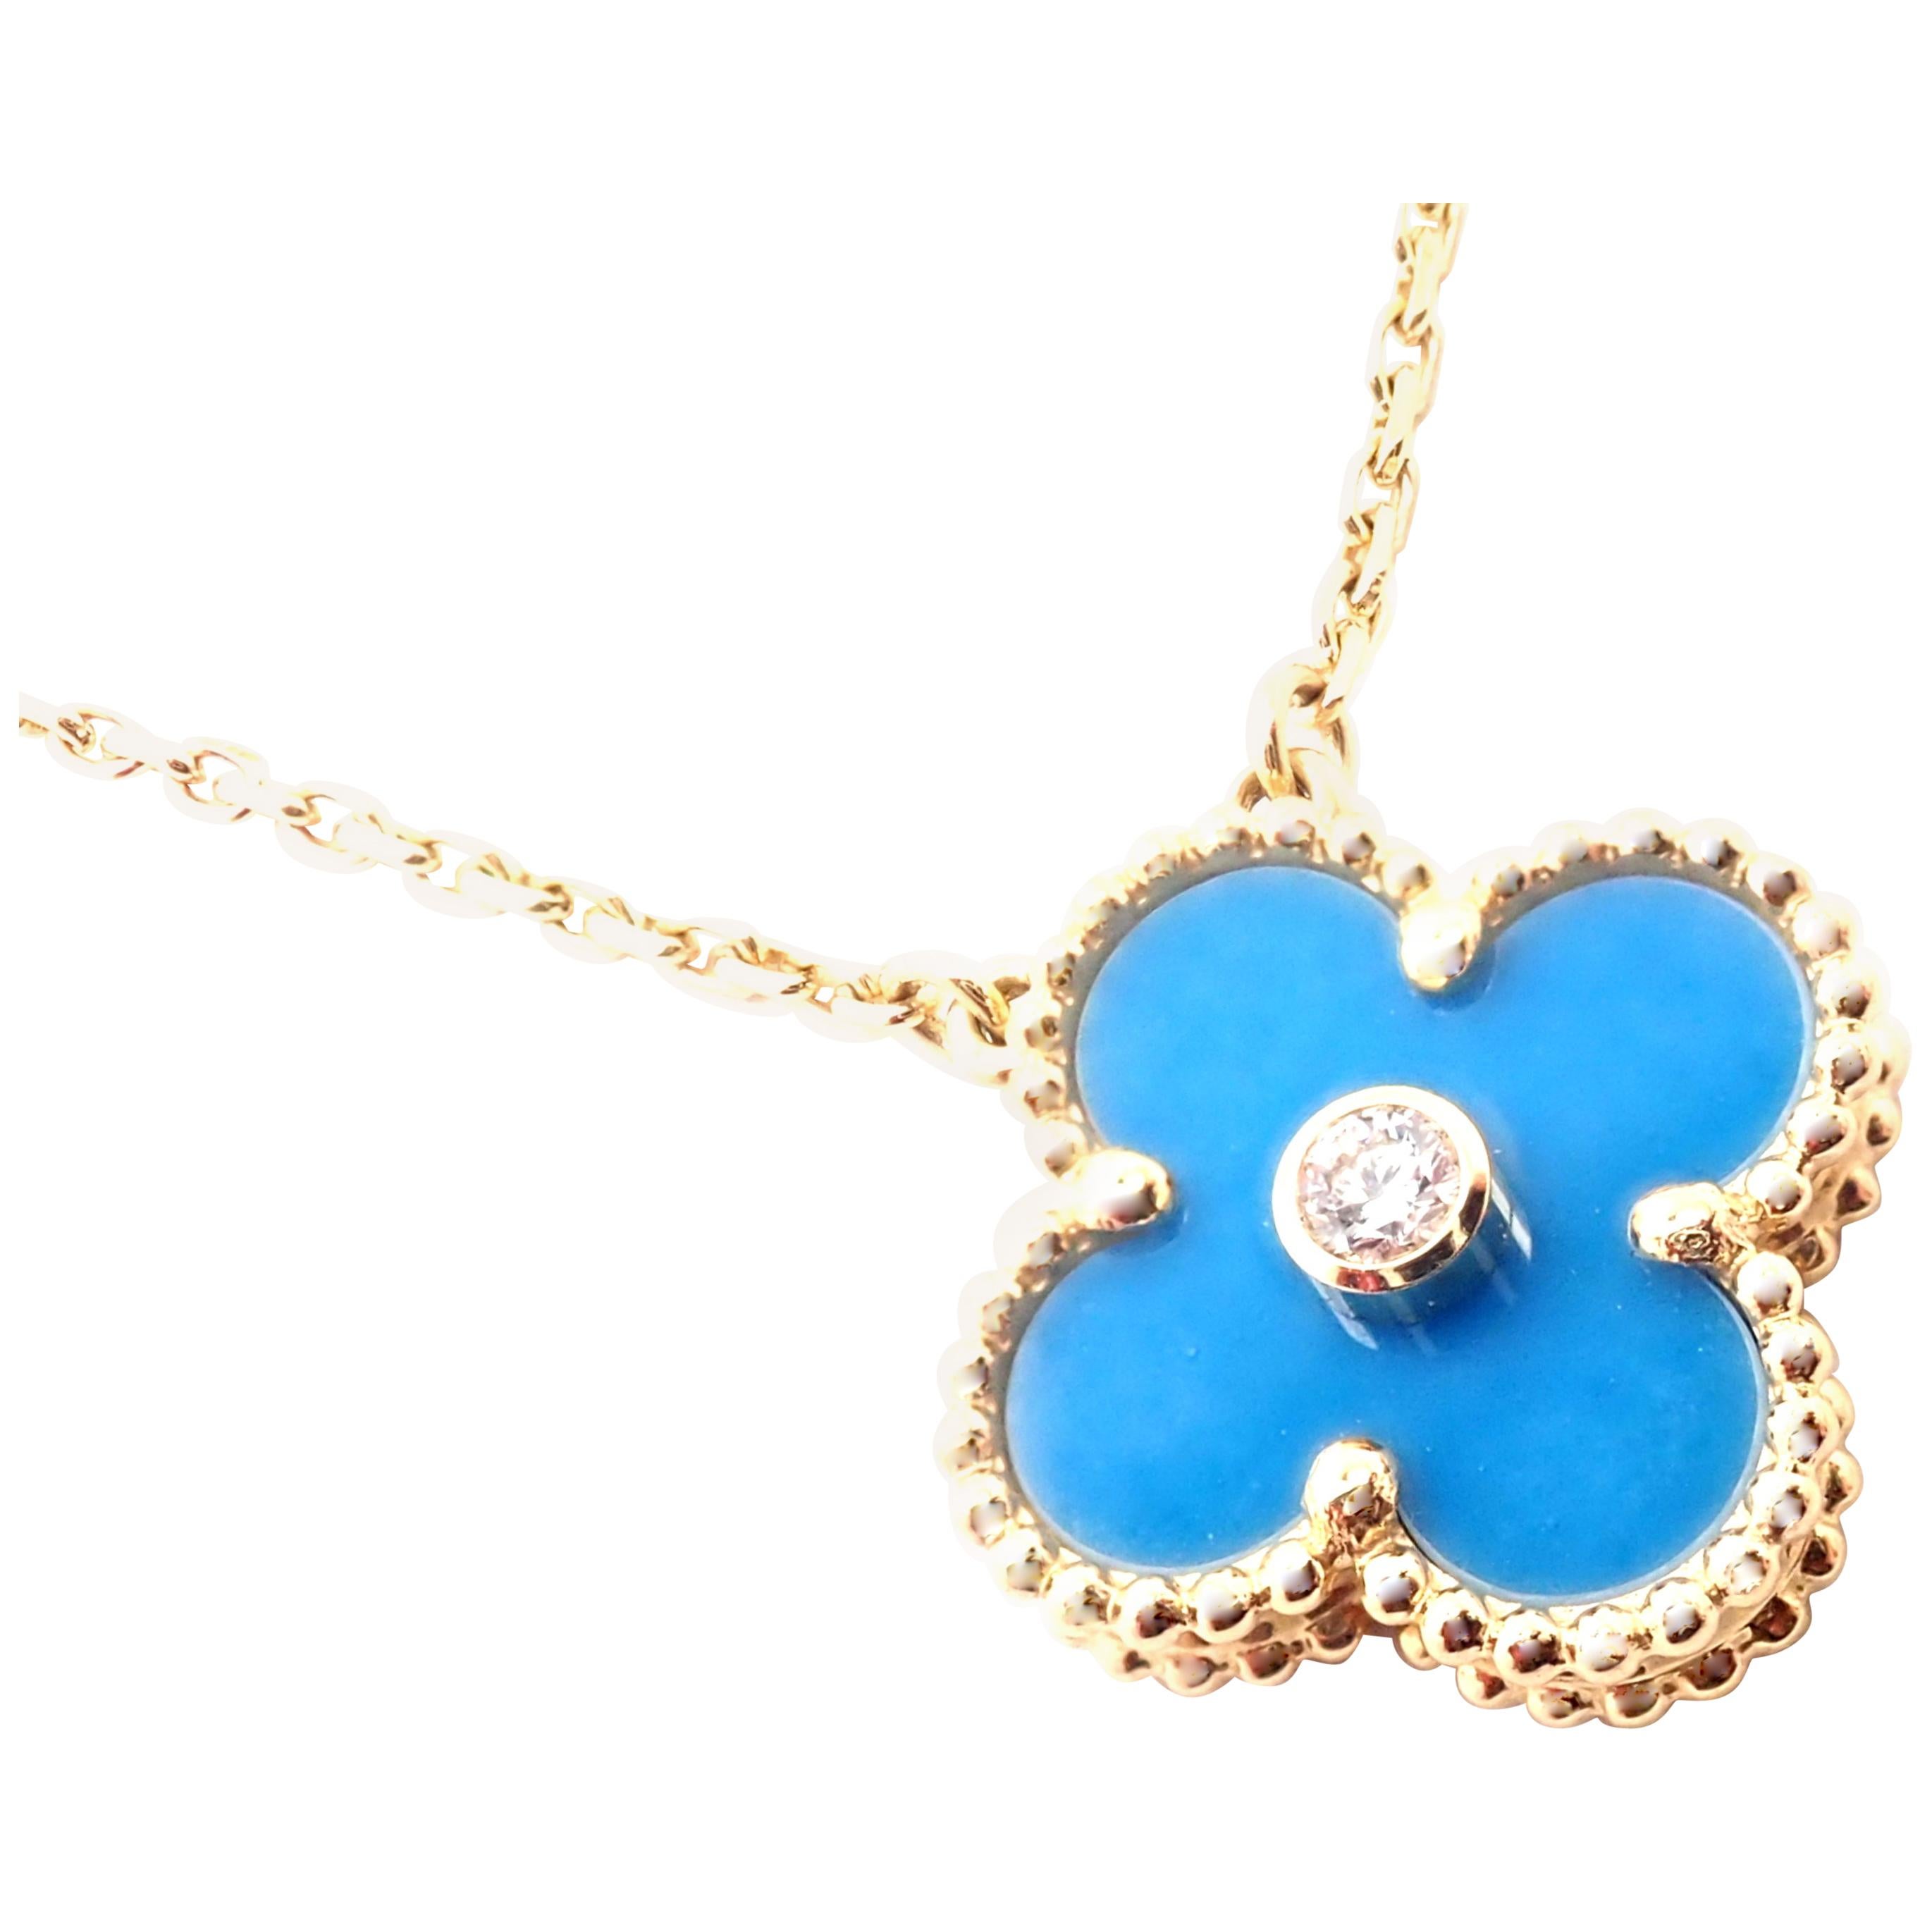 Vintage Alhambra necklace, 10 motifs - VCARP34800 - Van Cleef & Arpels |  Women accessories jewelry, Clover jewelry, Blue jewelry